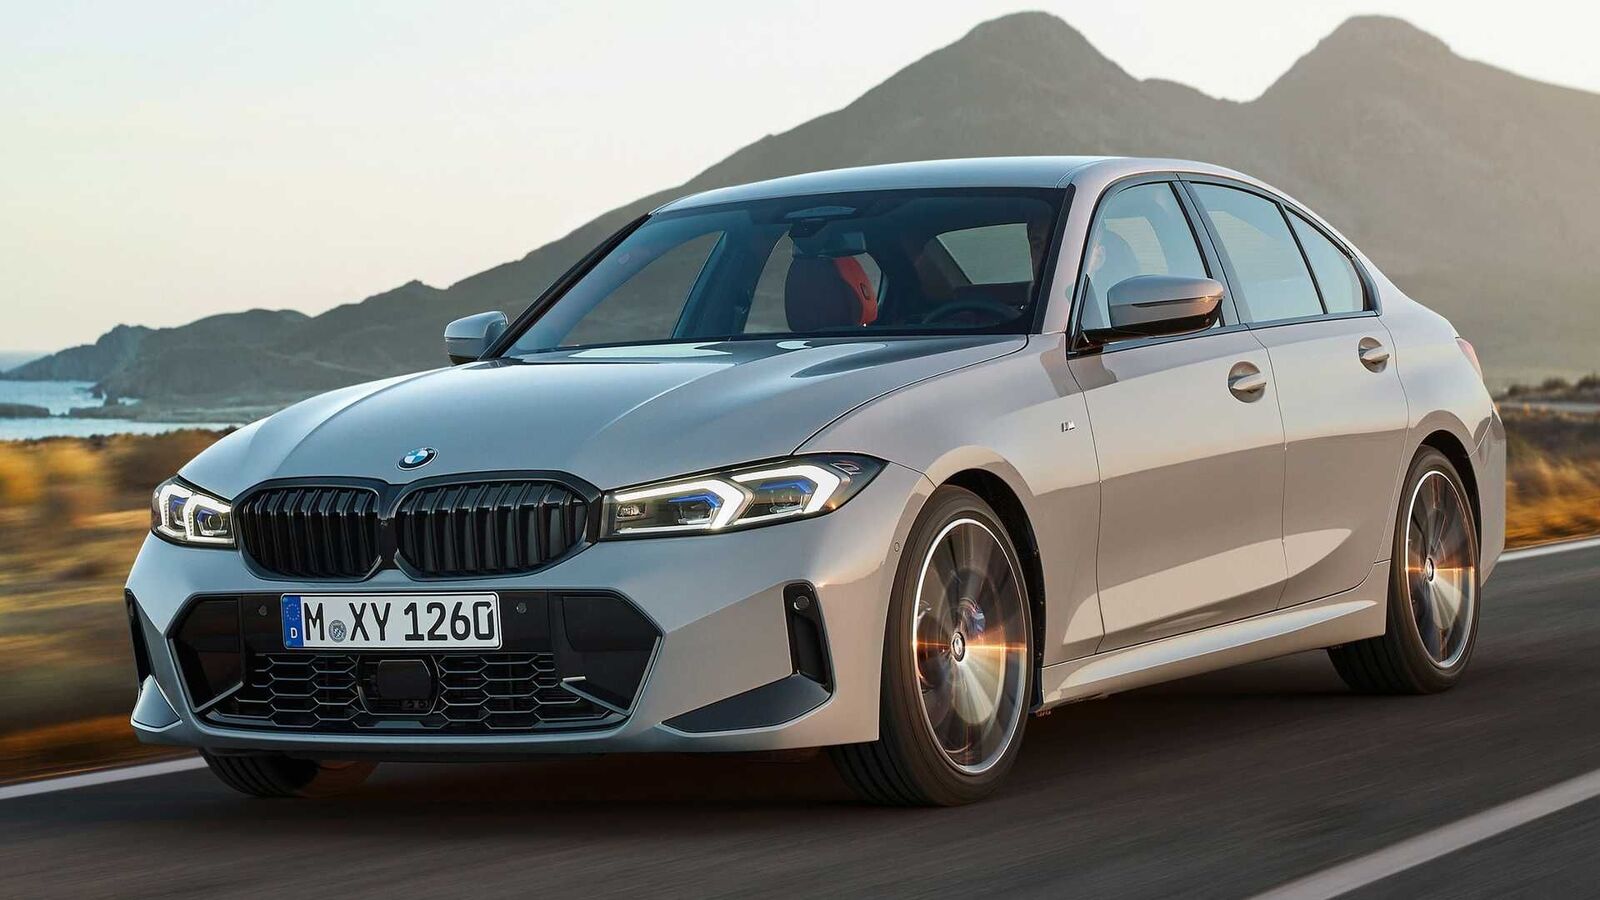 In Pics: New BMW 3 Series Sedan Breaks Cover, Host Of Technologies On Offer